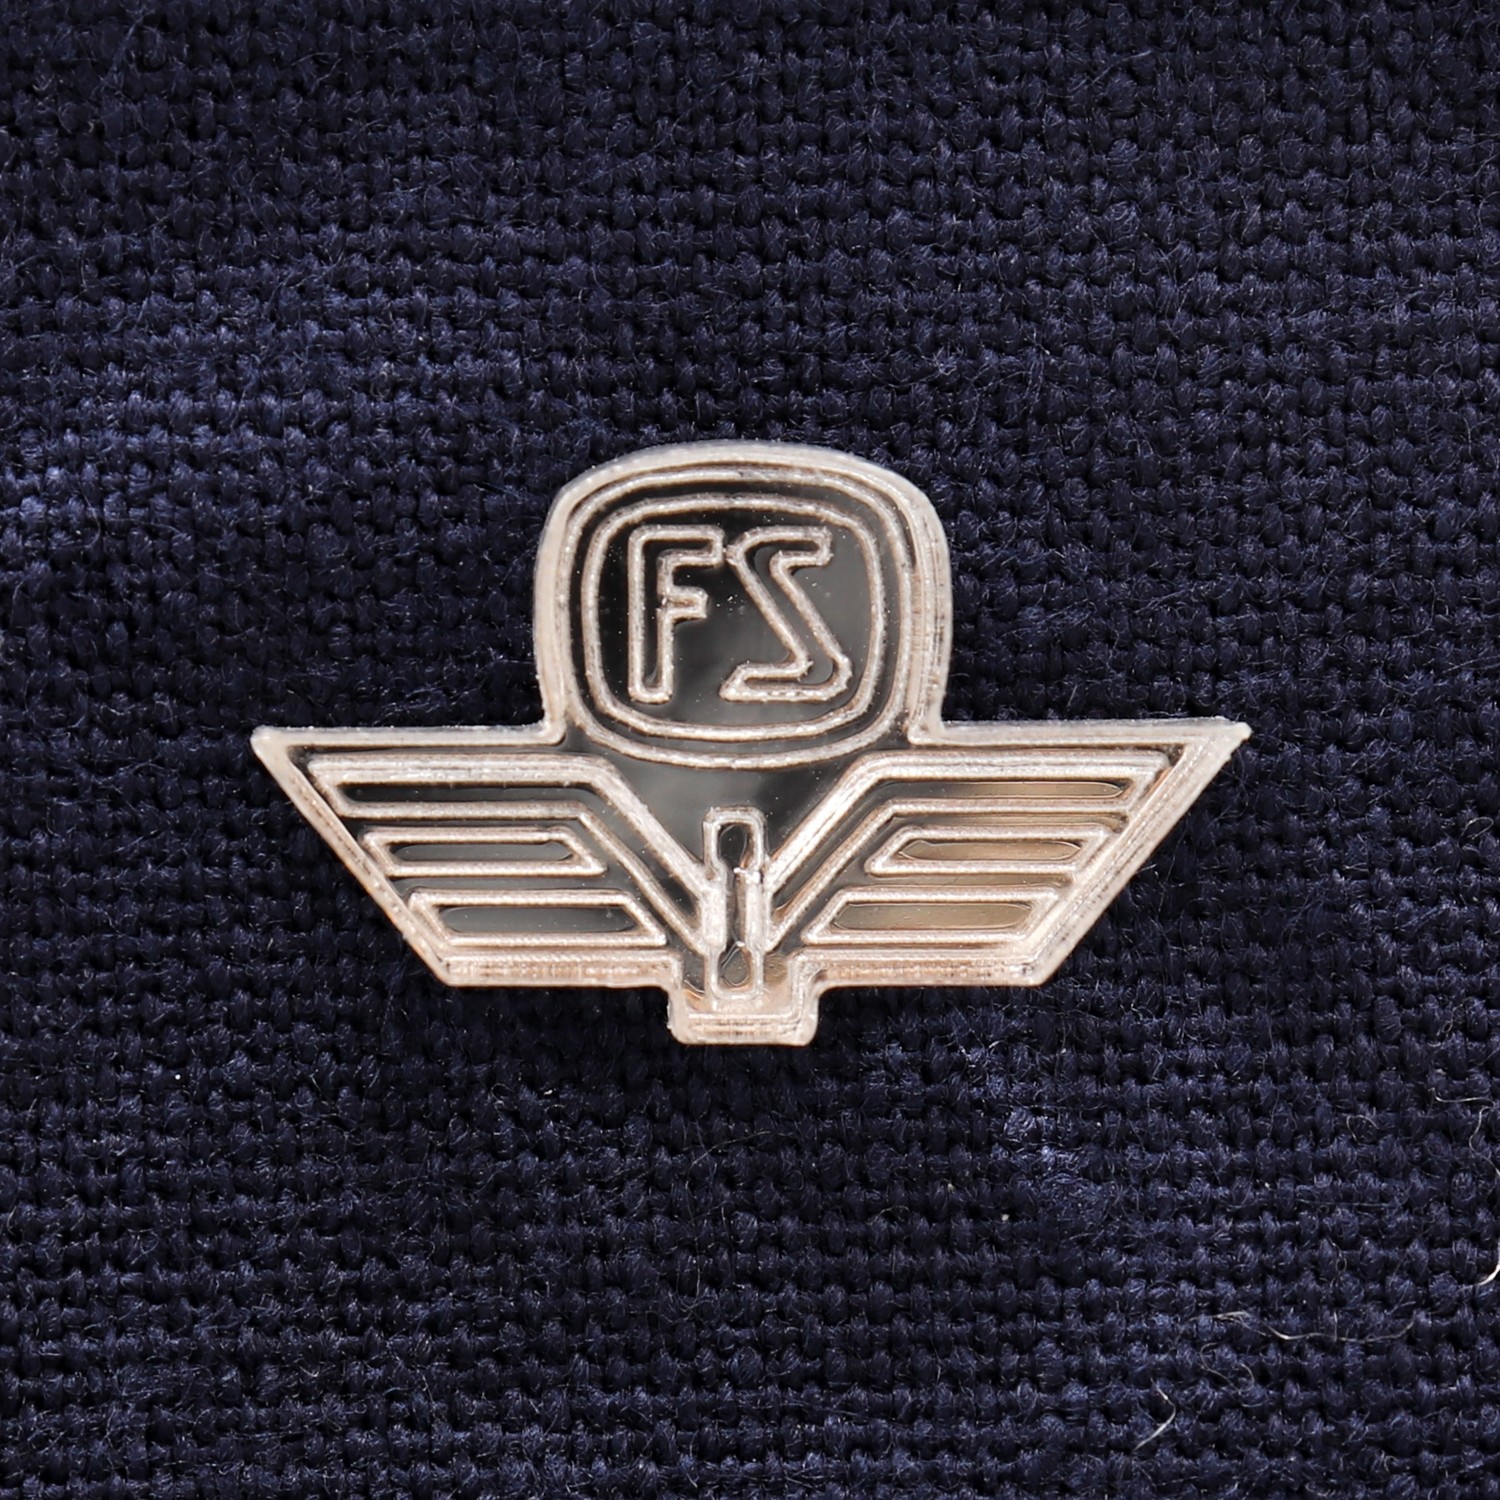 Spilla in argento con logo FS